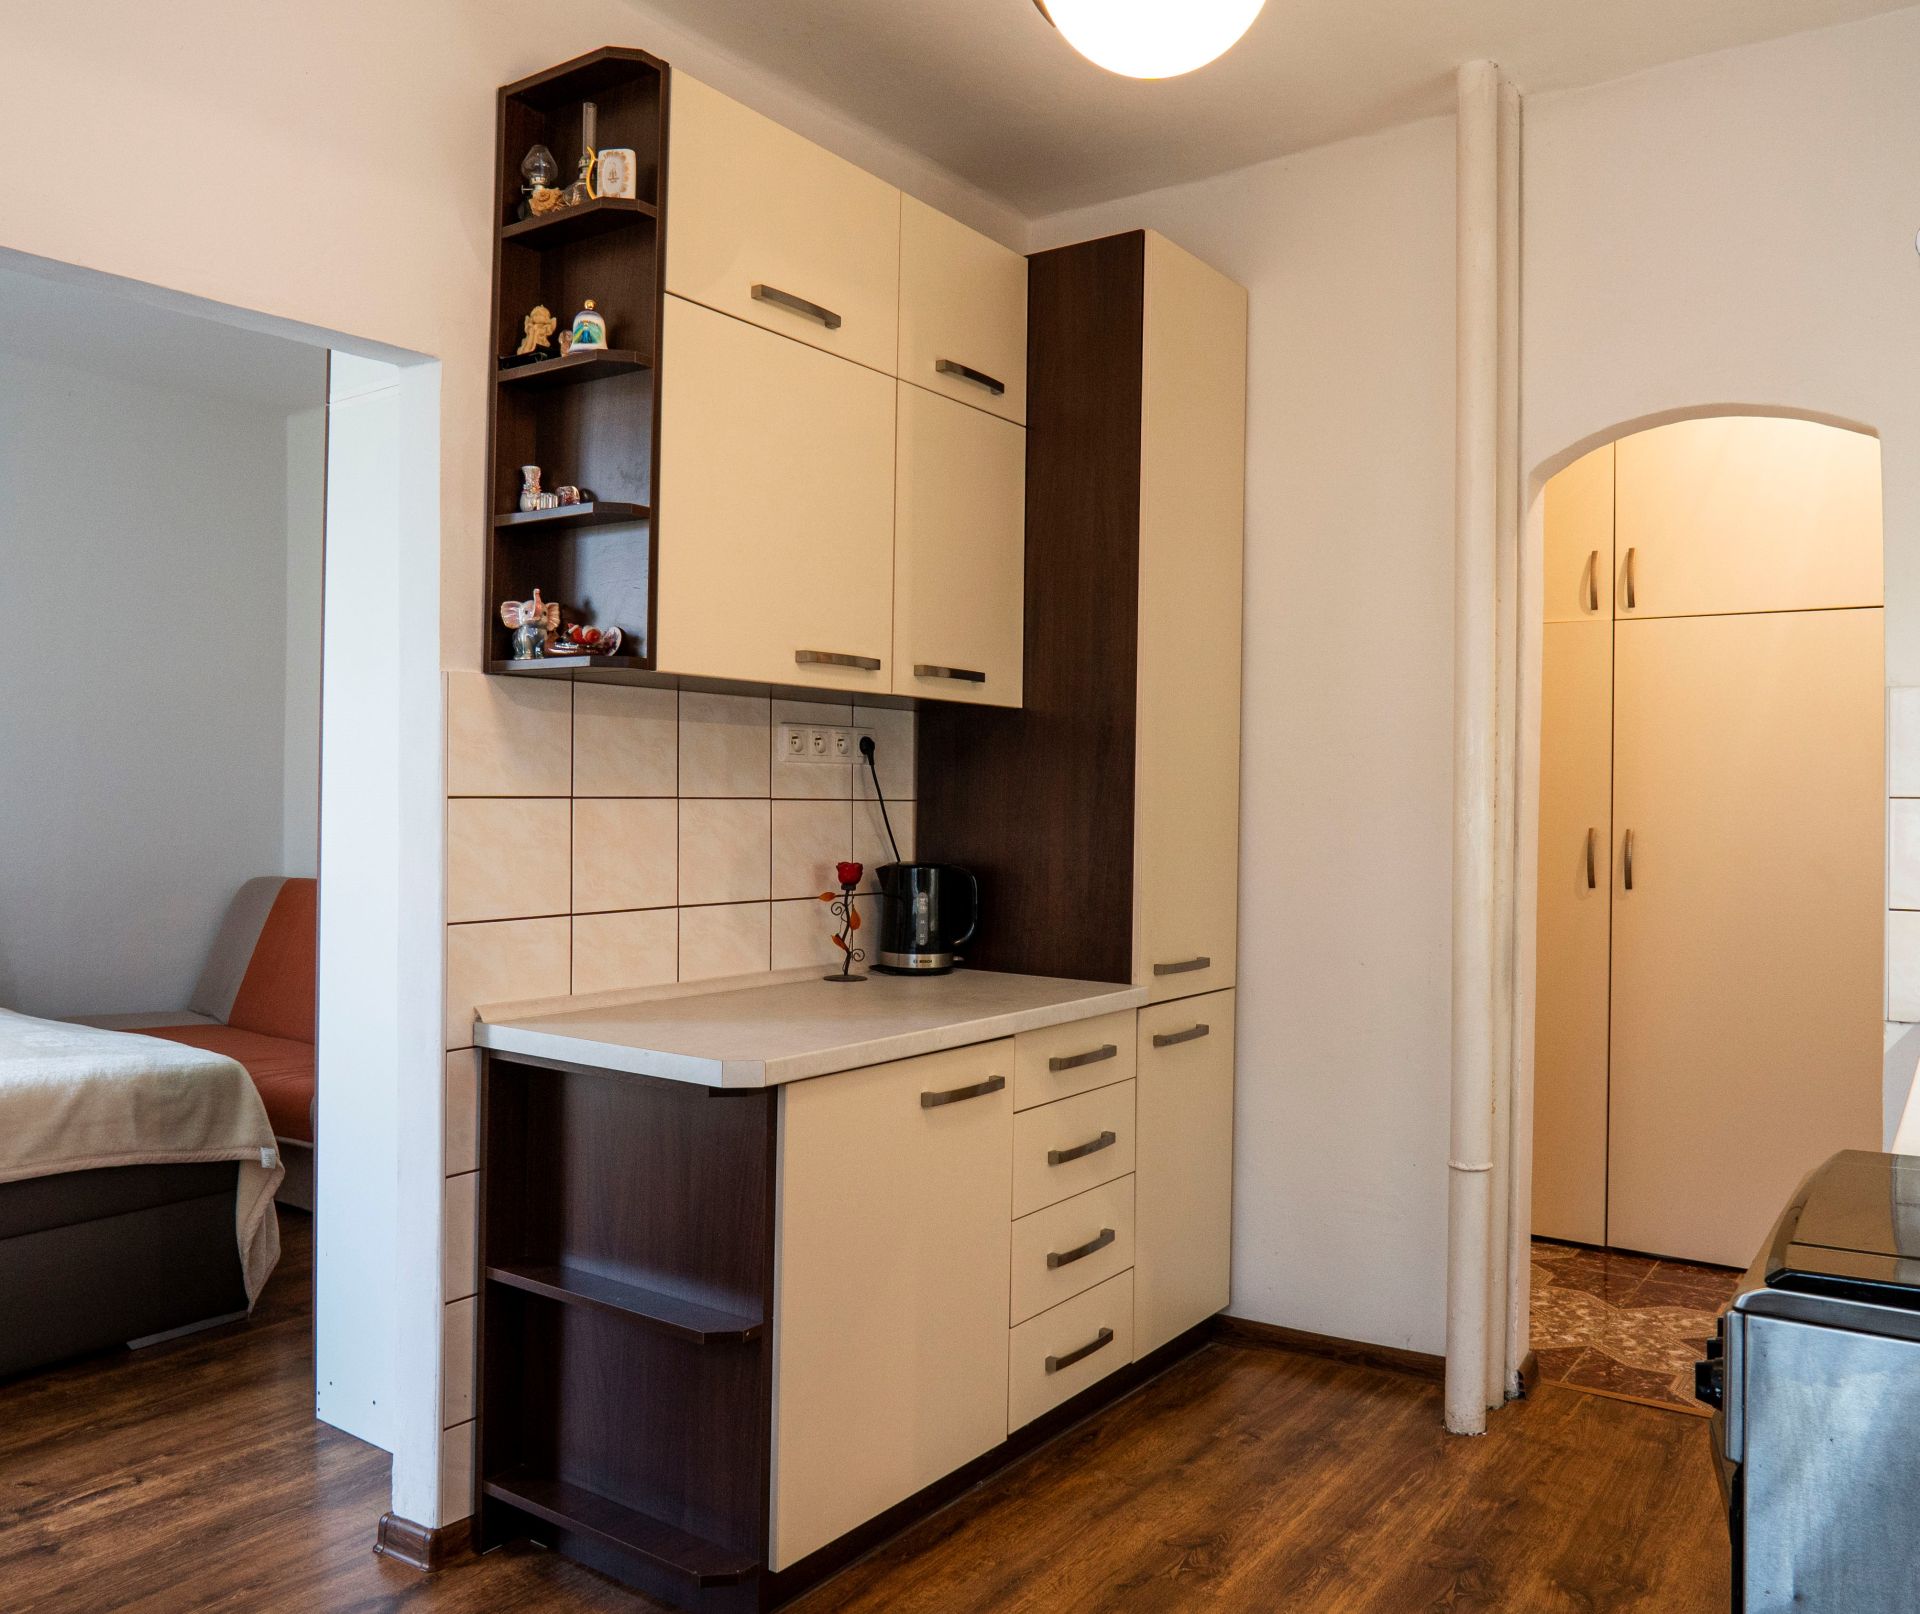 REZERVOVANÉ: 2-izbový zrenovovaný byt s francúzskym balkónom, centrum, Gorazdova ulica, Spišská Nová Ves